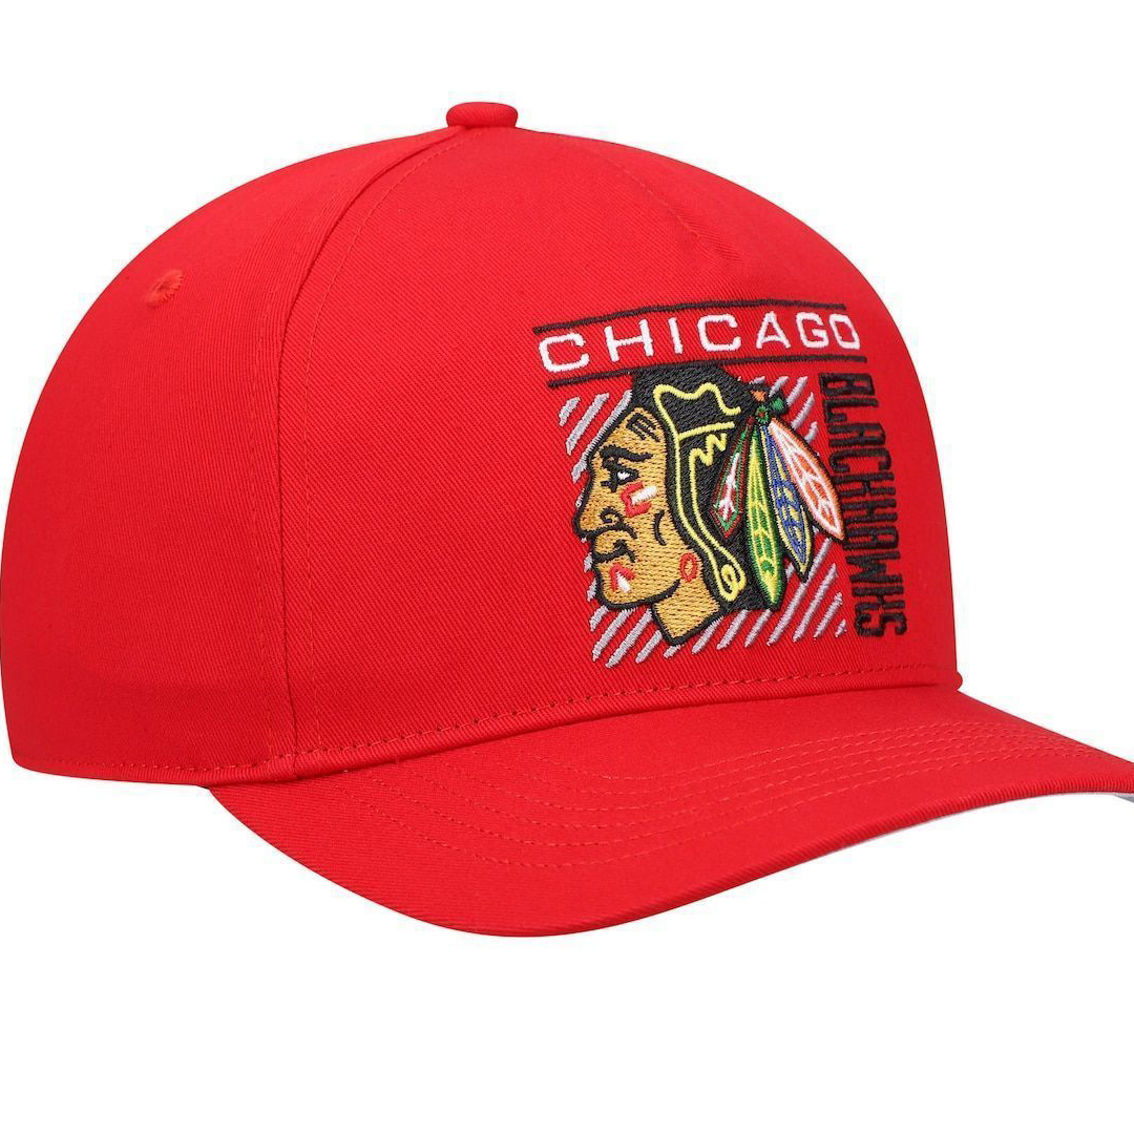 '47 Men's Red Chicago Blackhawks Reflex Hitch Snapback Hat - Image 4 of 4